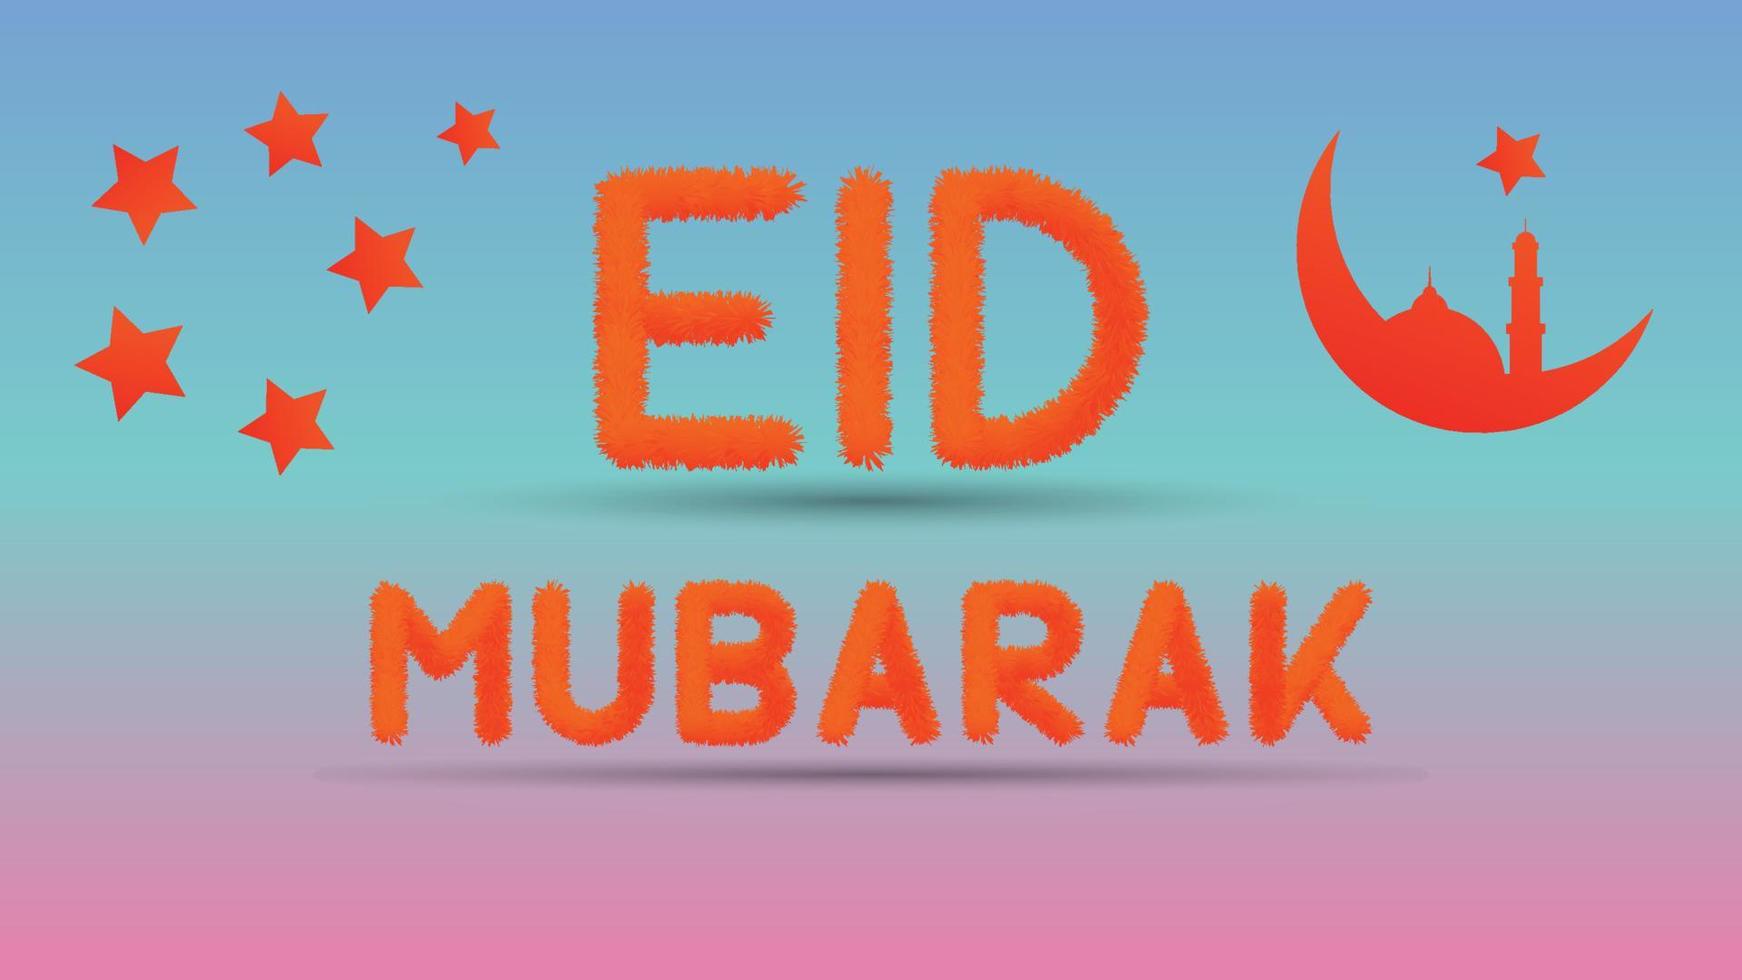 eid mubakak banner com tipografia personalizada vetor